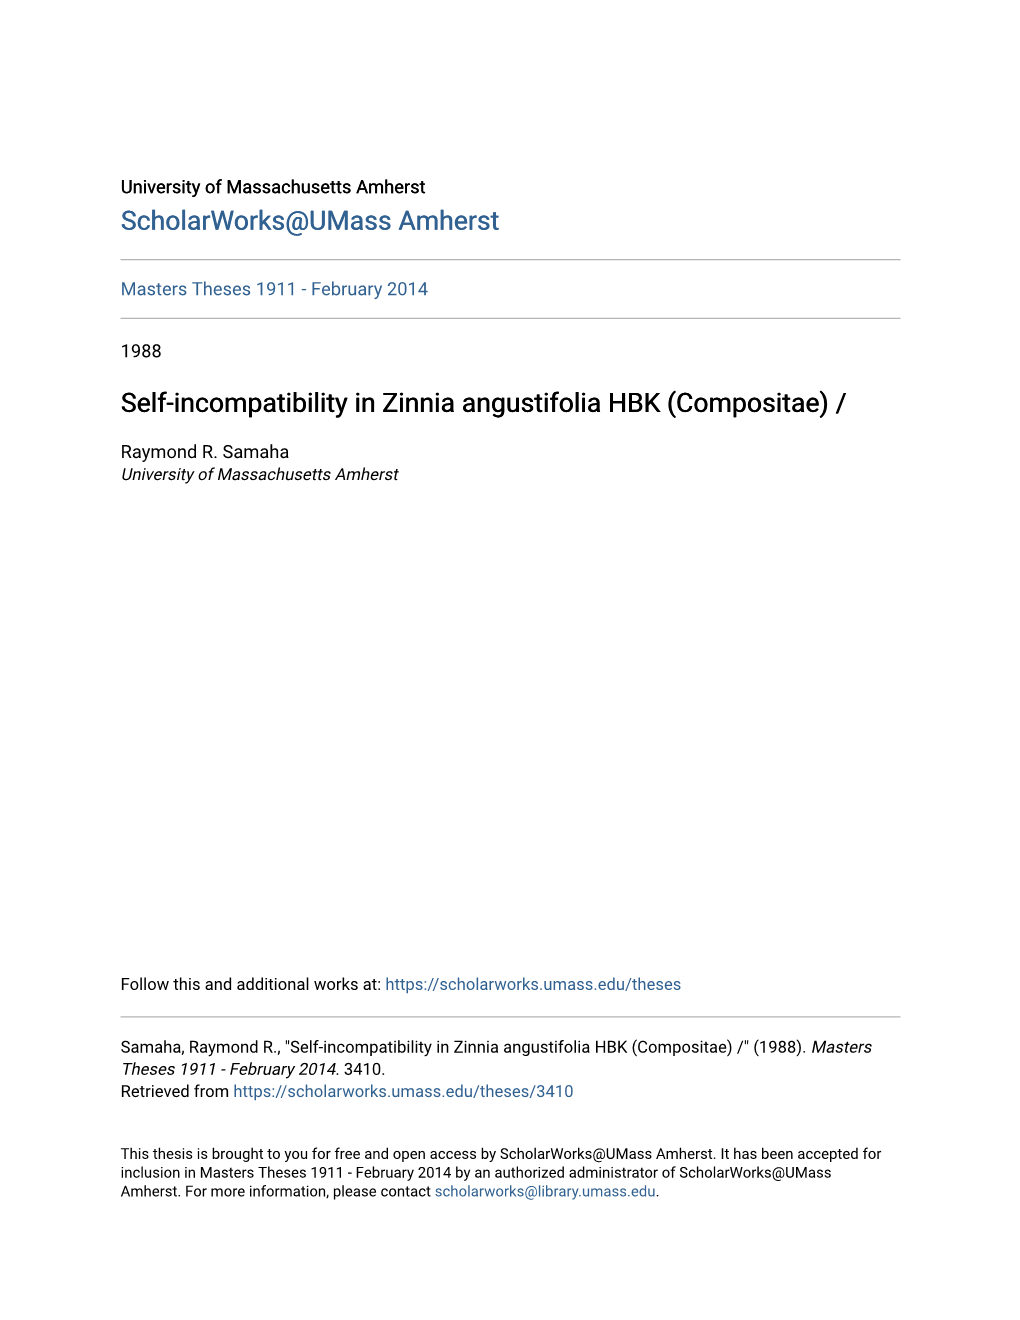 Self-Incompatibility in Zinnia Angustifolia HBK (Compositae)